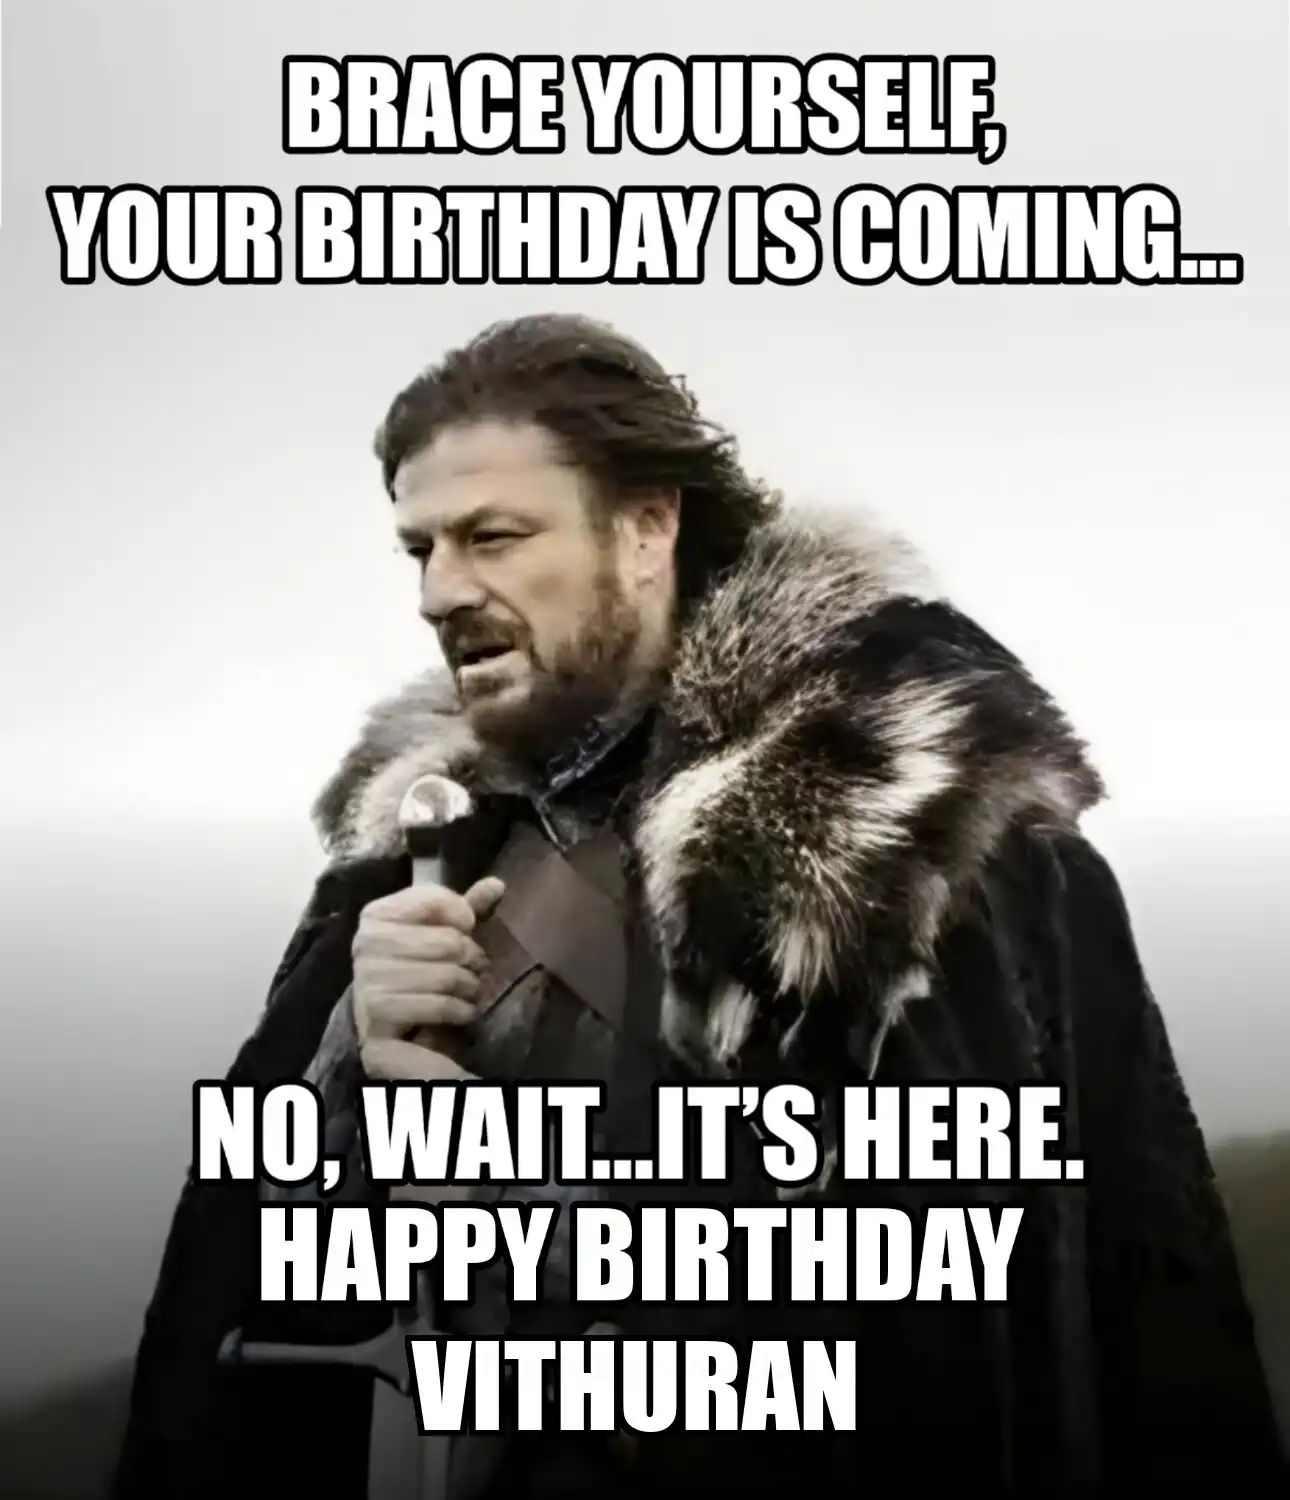 Happy Birthday Vithuran Brace Yourself Your Birthday Is Coming Meme